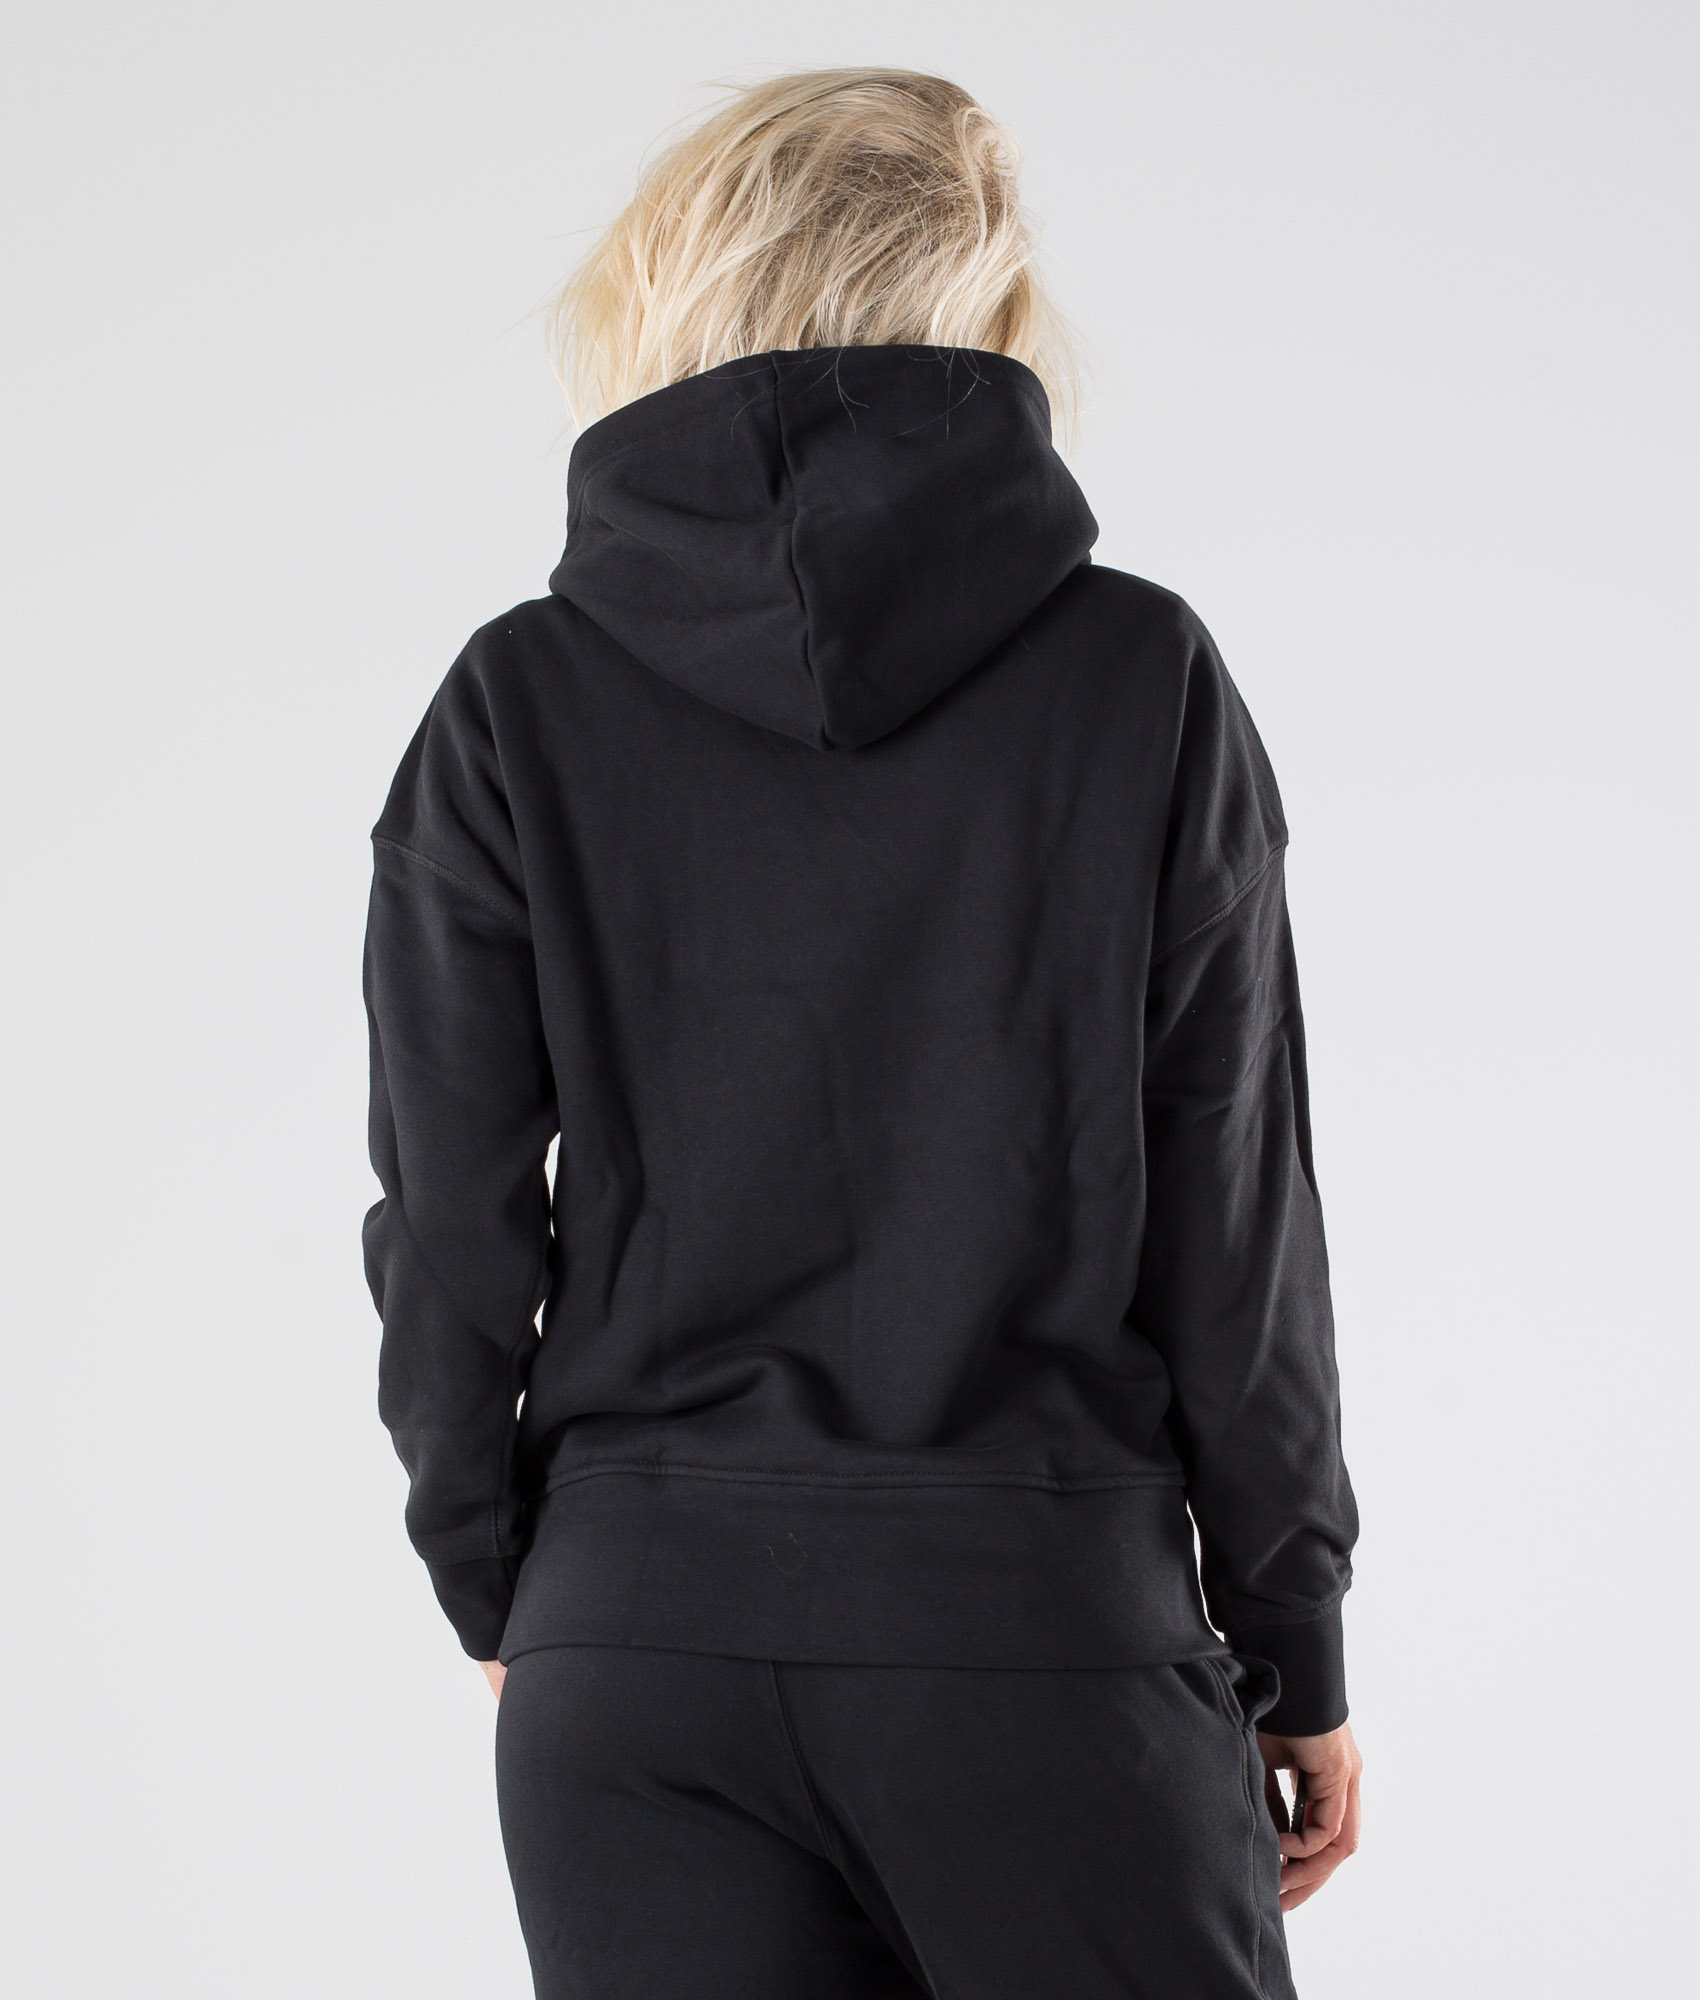 plain black adidas hoodie